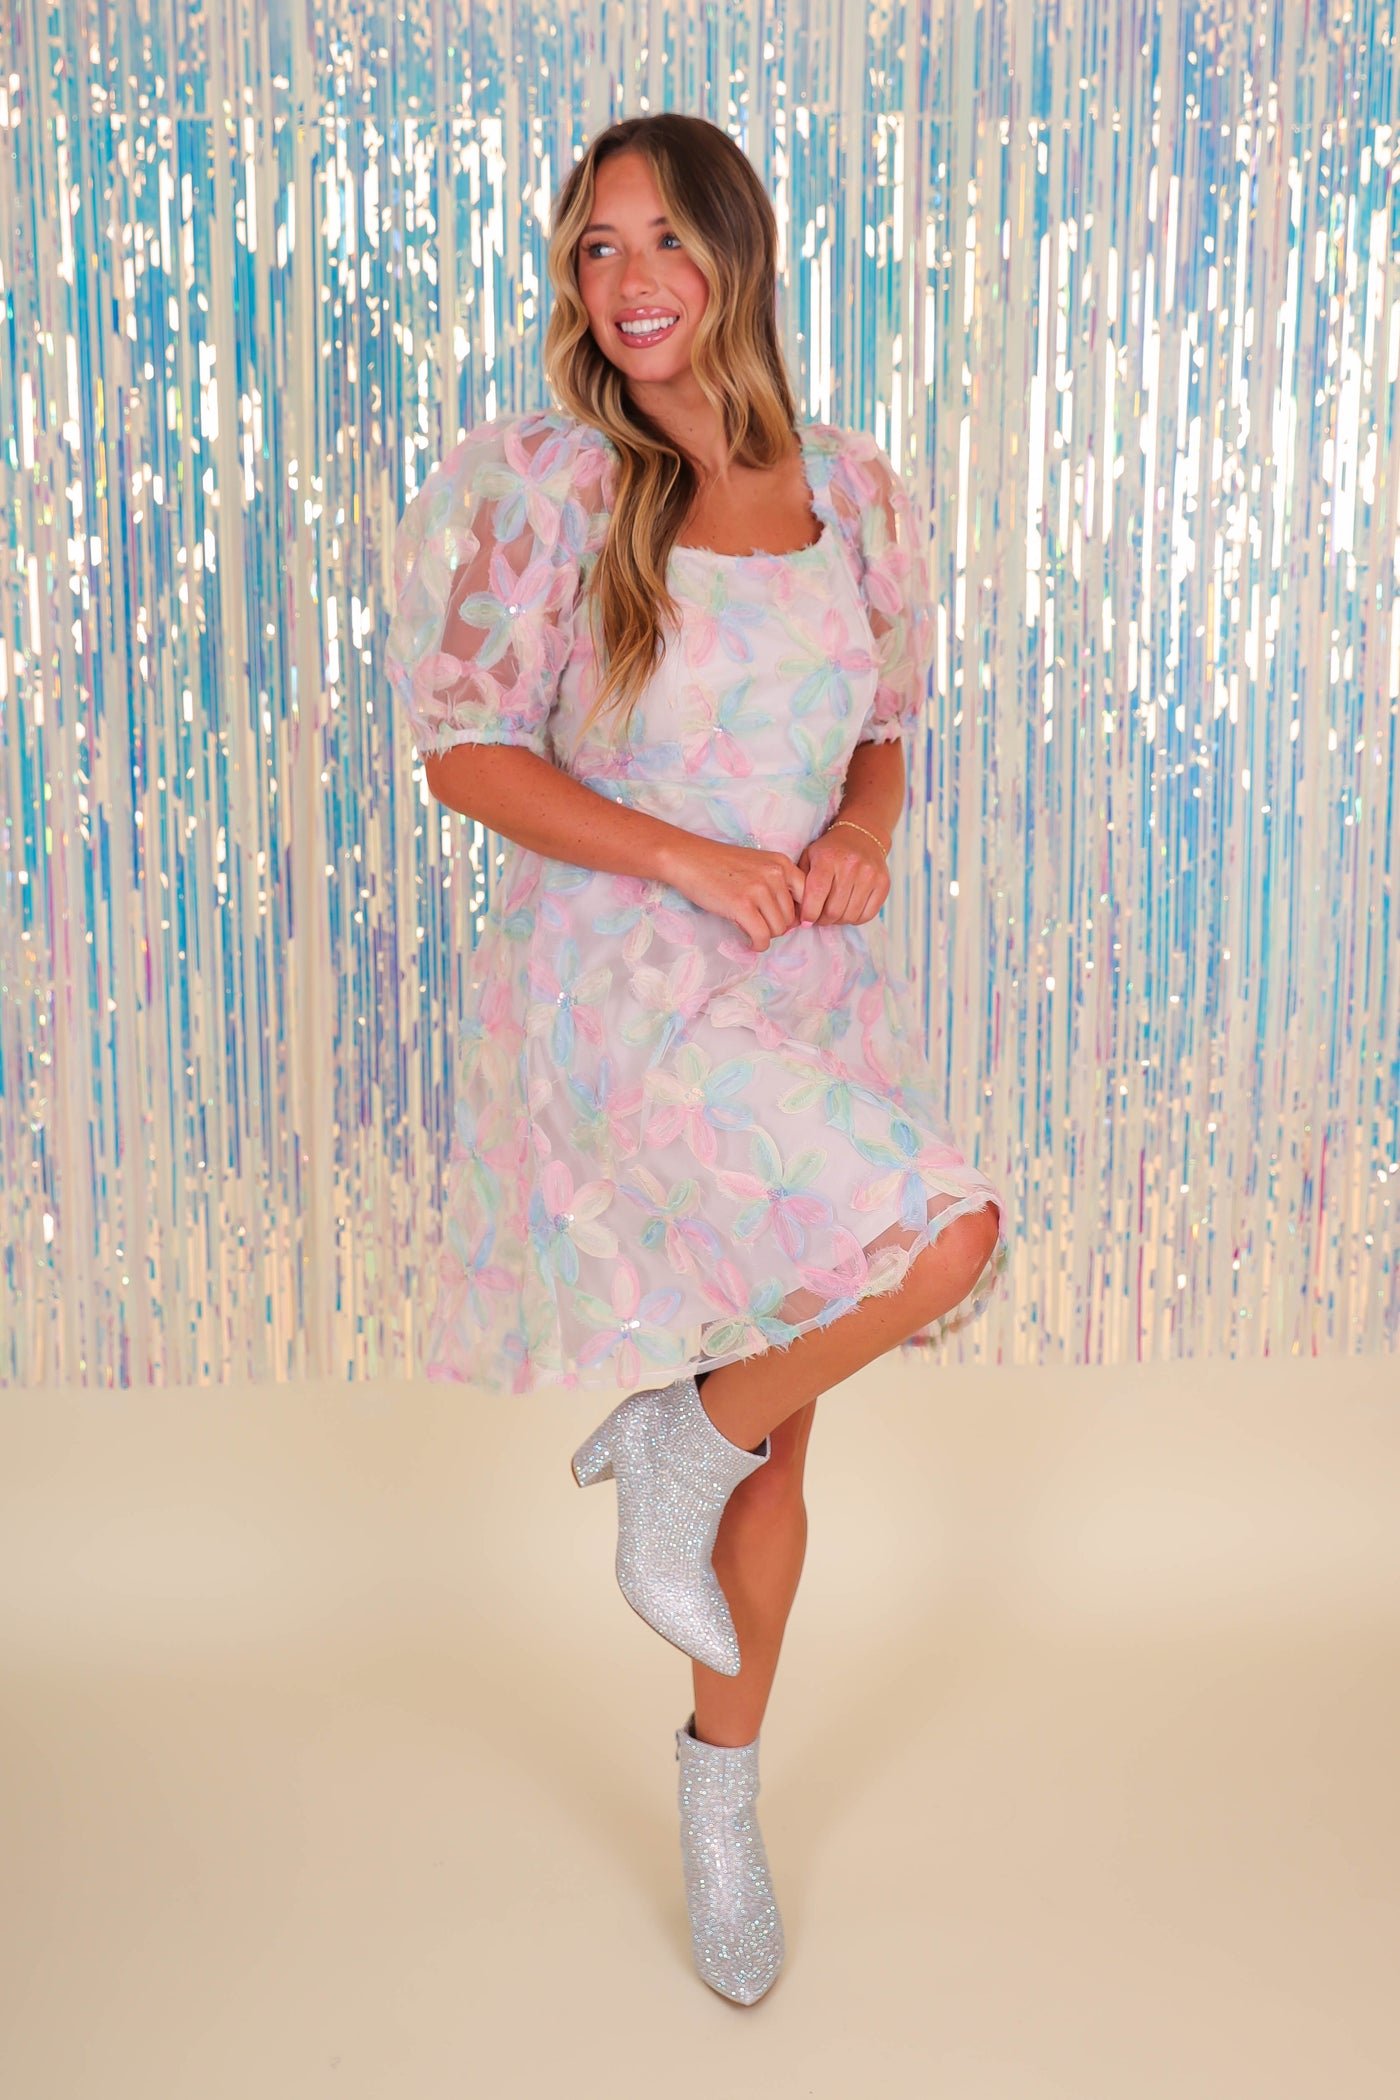 Floral Chiffon Dress- Women's Pastel Babydoll Dress- Jodifl Flower Dress